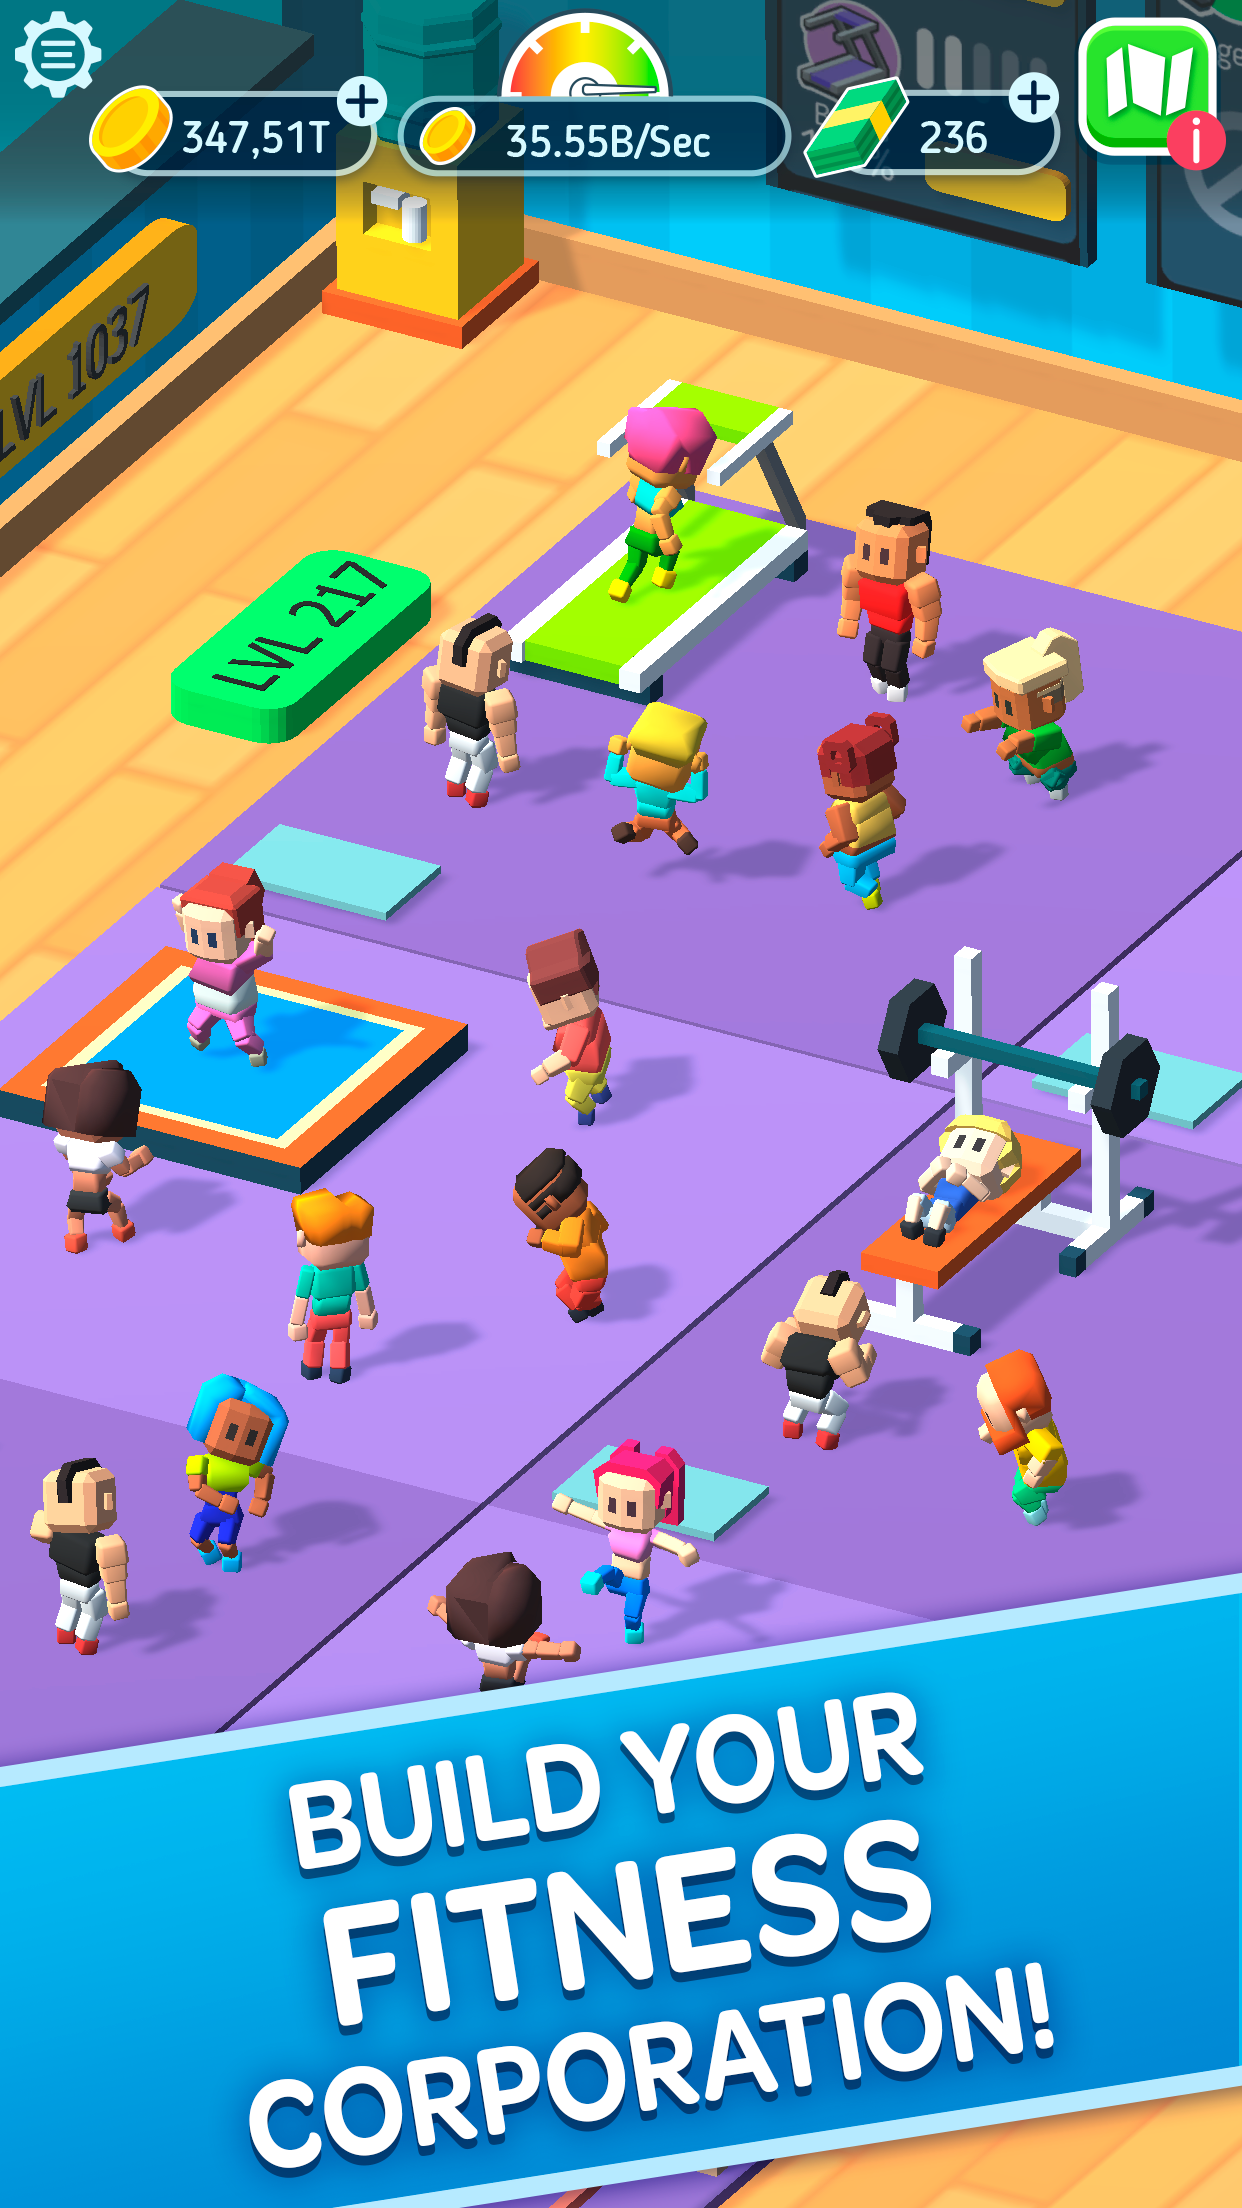 Screenshot 1 of Fitness Corp. - jeux d'entreprise de sport inactif 0.1